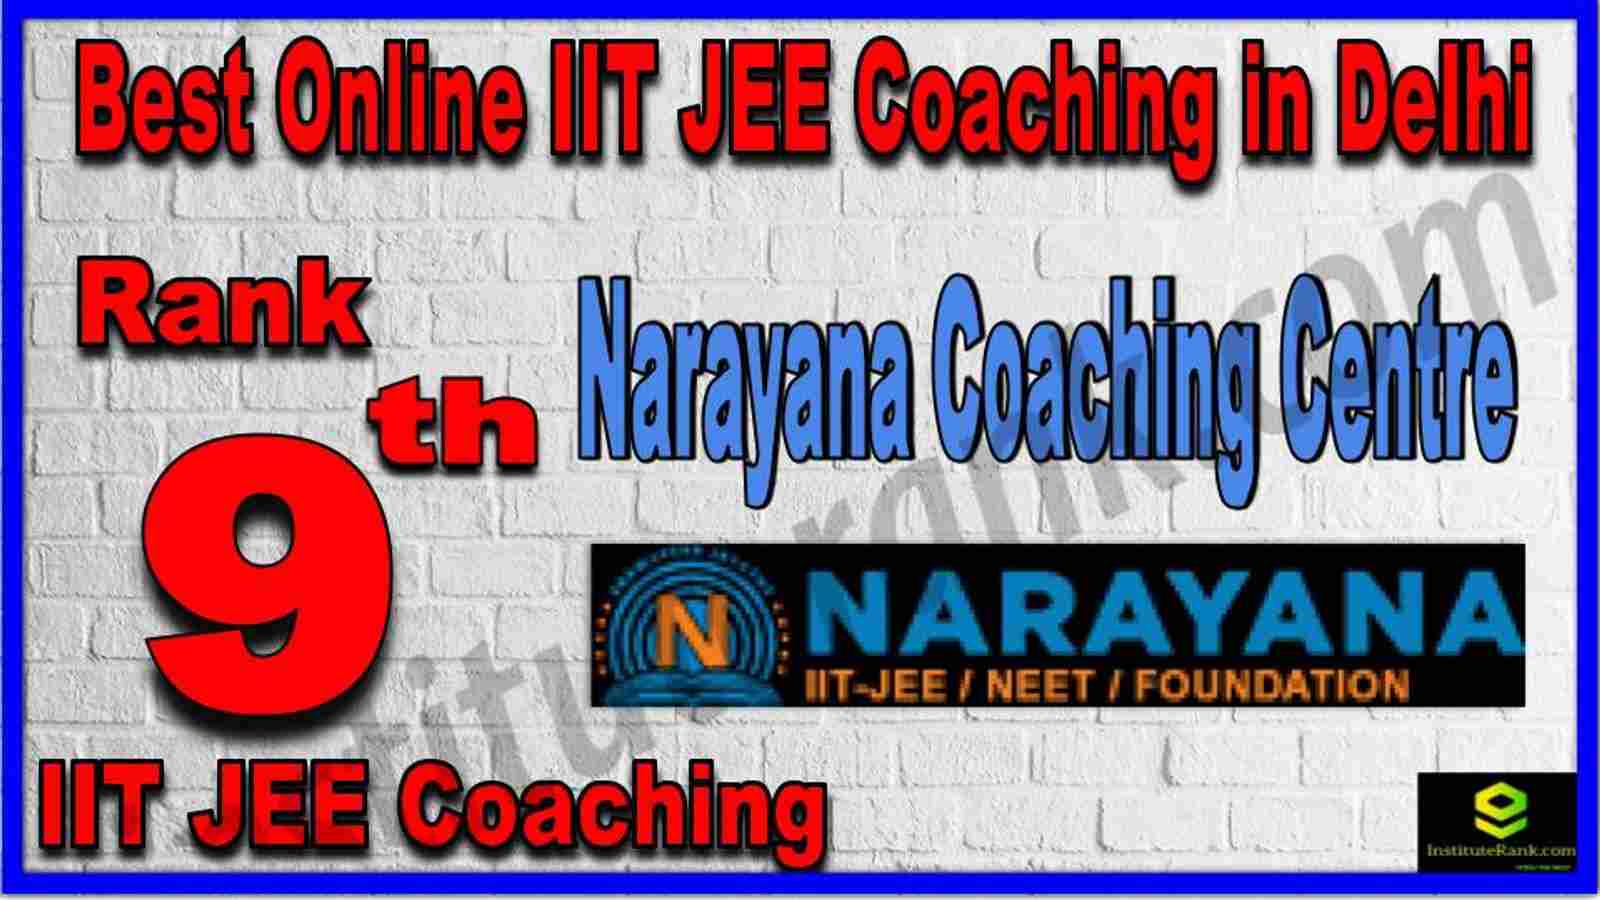 Rank 9th Best Online IIT JEE Coaching in Delhi